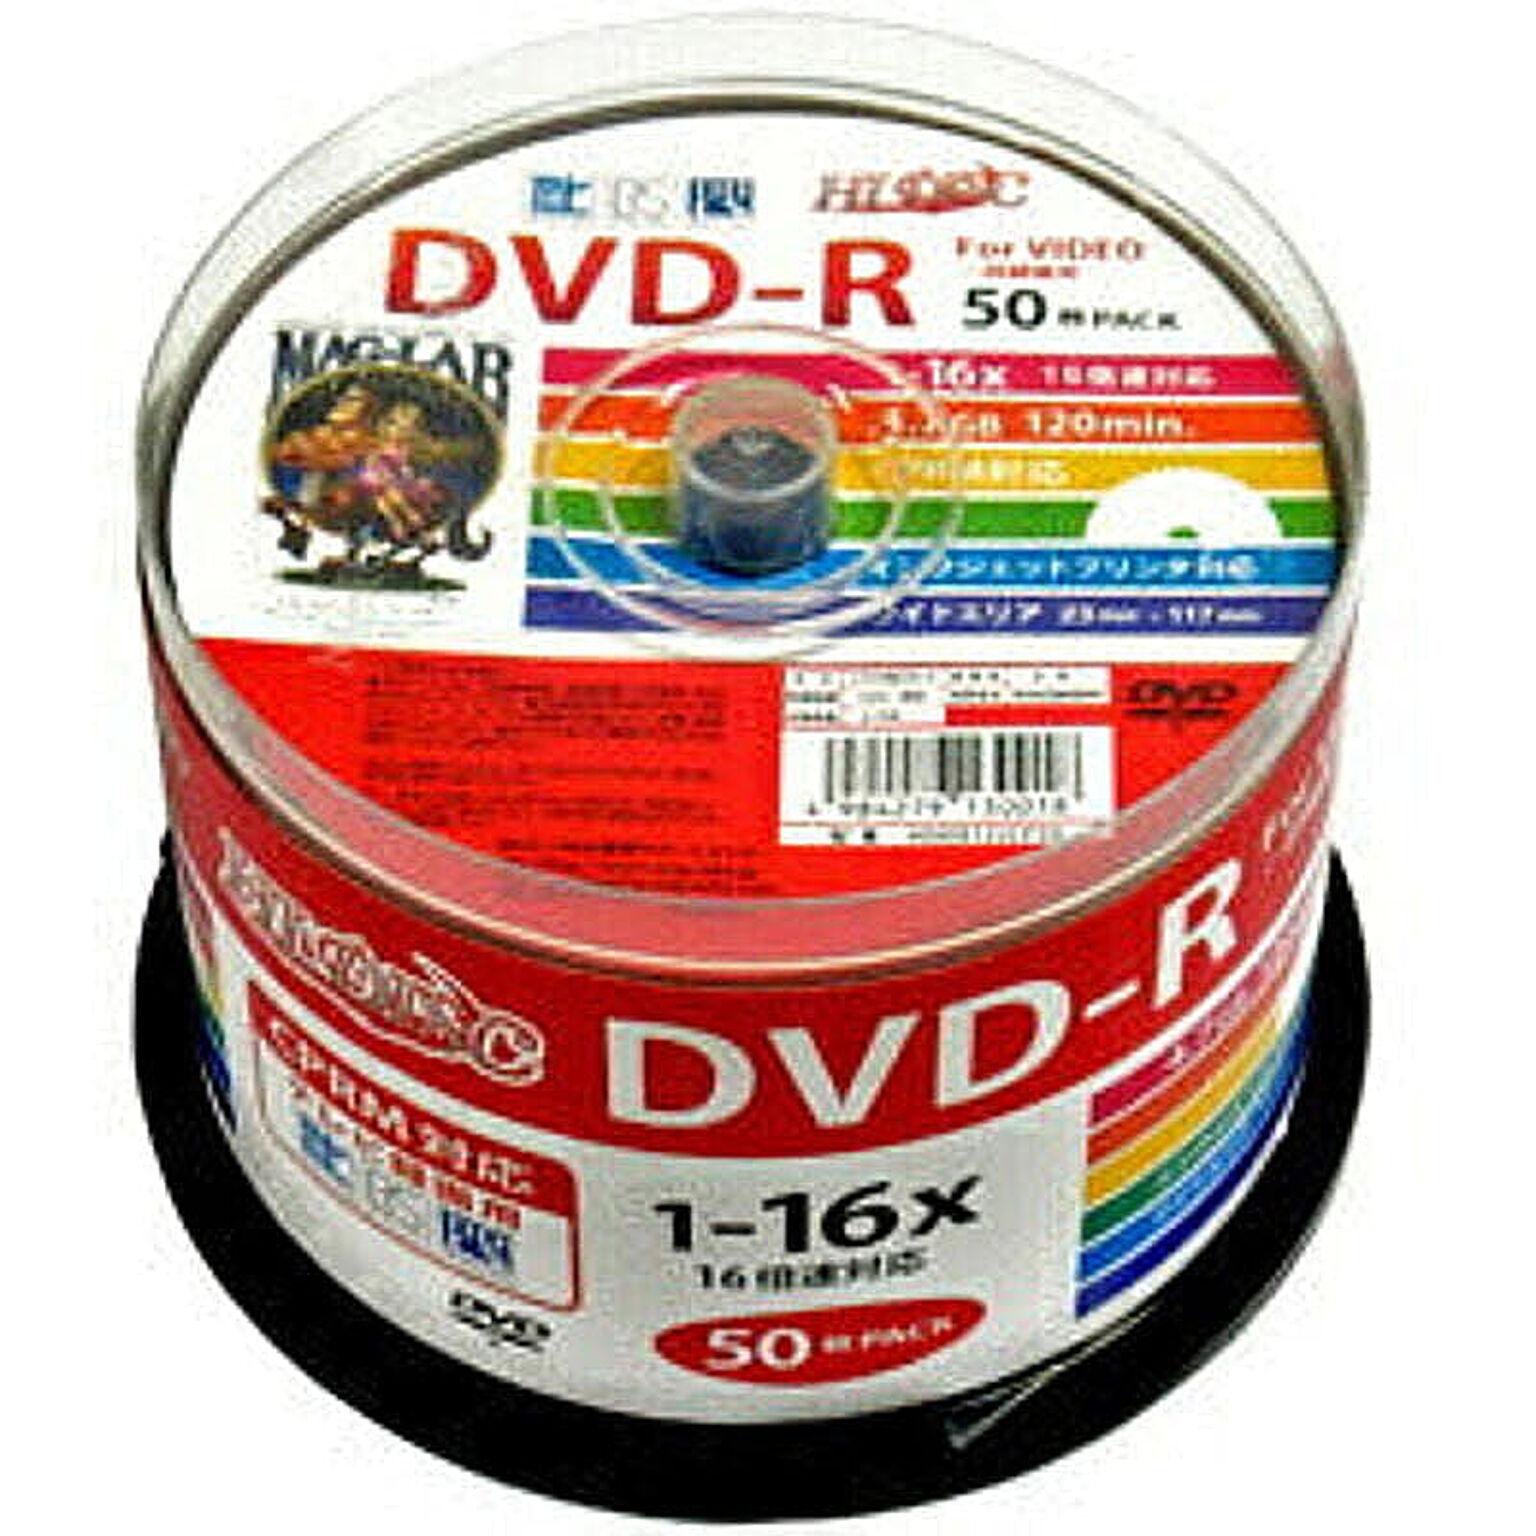 HI DISC　DVD-R 4.7GB 50枚スピンドル CPRM対応 ワイドプリンタブル　HDDR12JCP50 管理No. 4984279130018